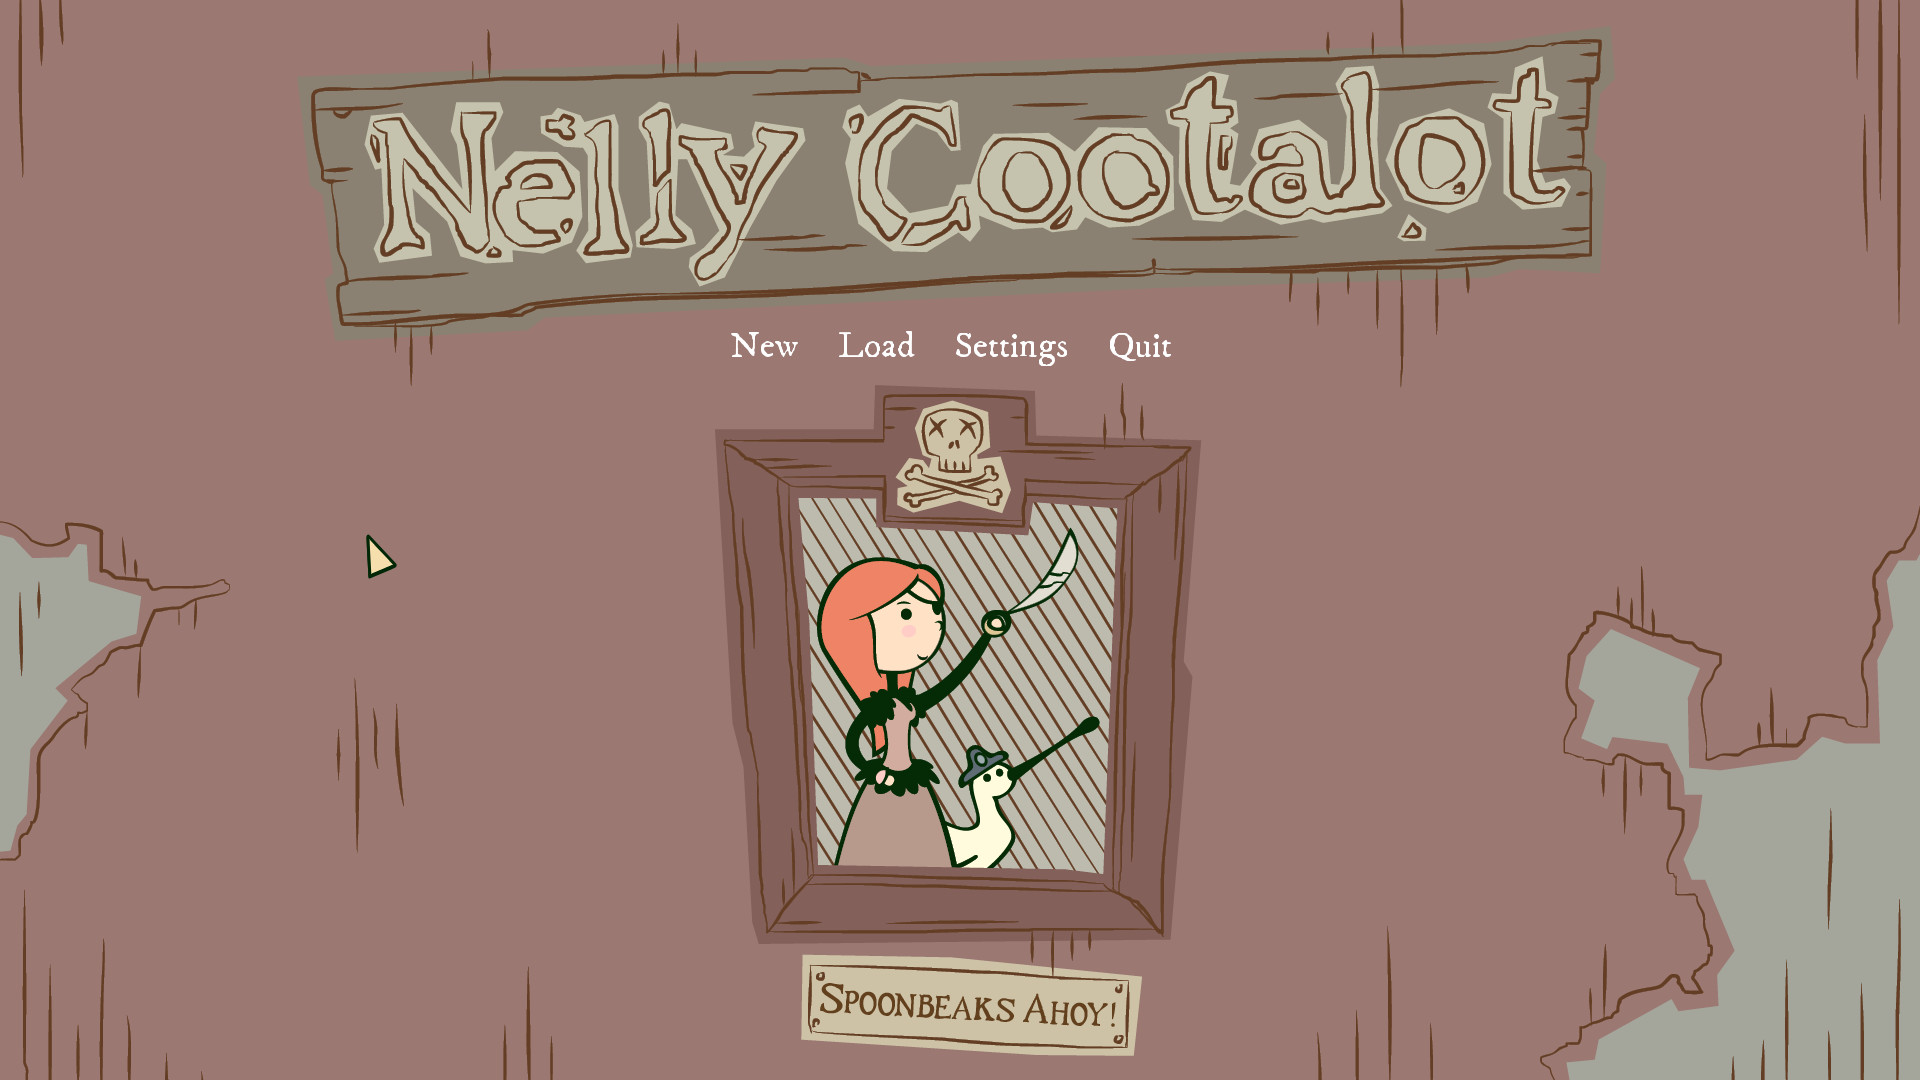 Nelly Cootalot: Spoonbeaks Ahoy! HD Steam CD Key